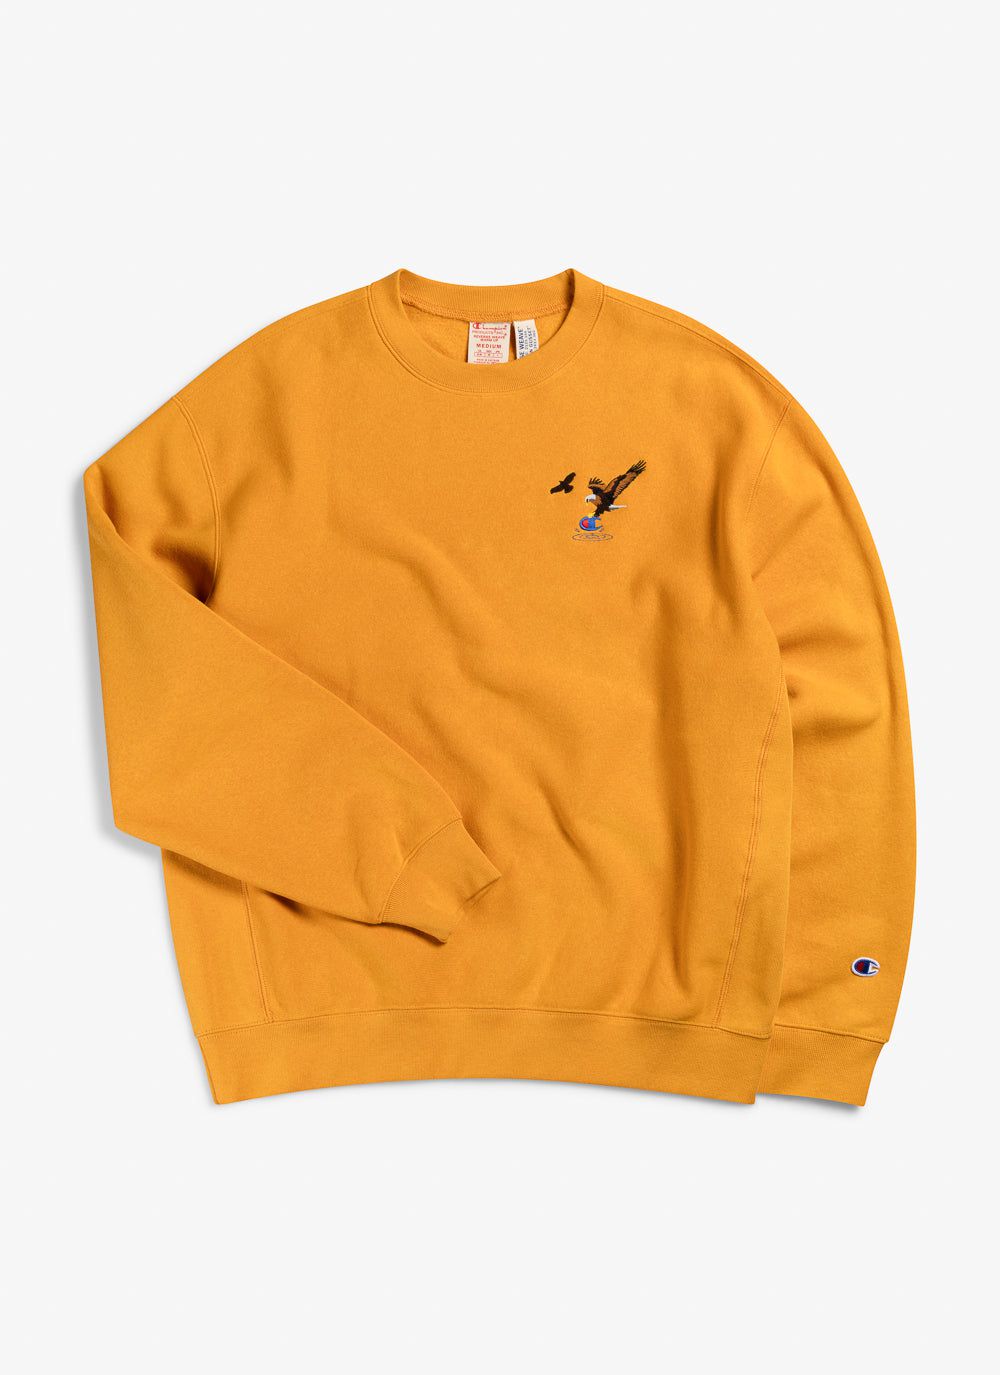 Men's Embroidered Champion Sweatshirt | Swooping Eagle | Yellow